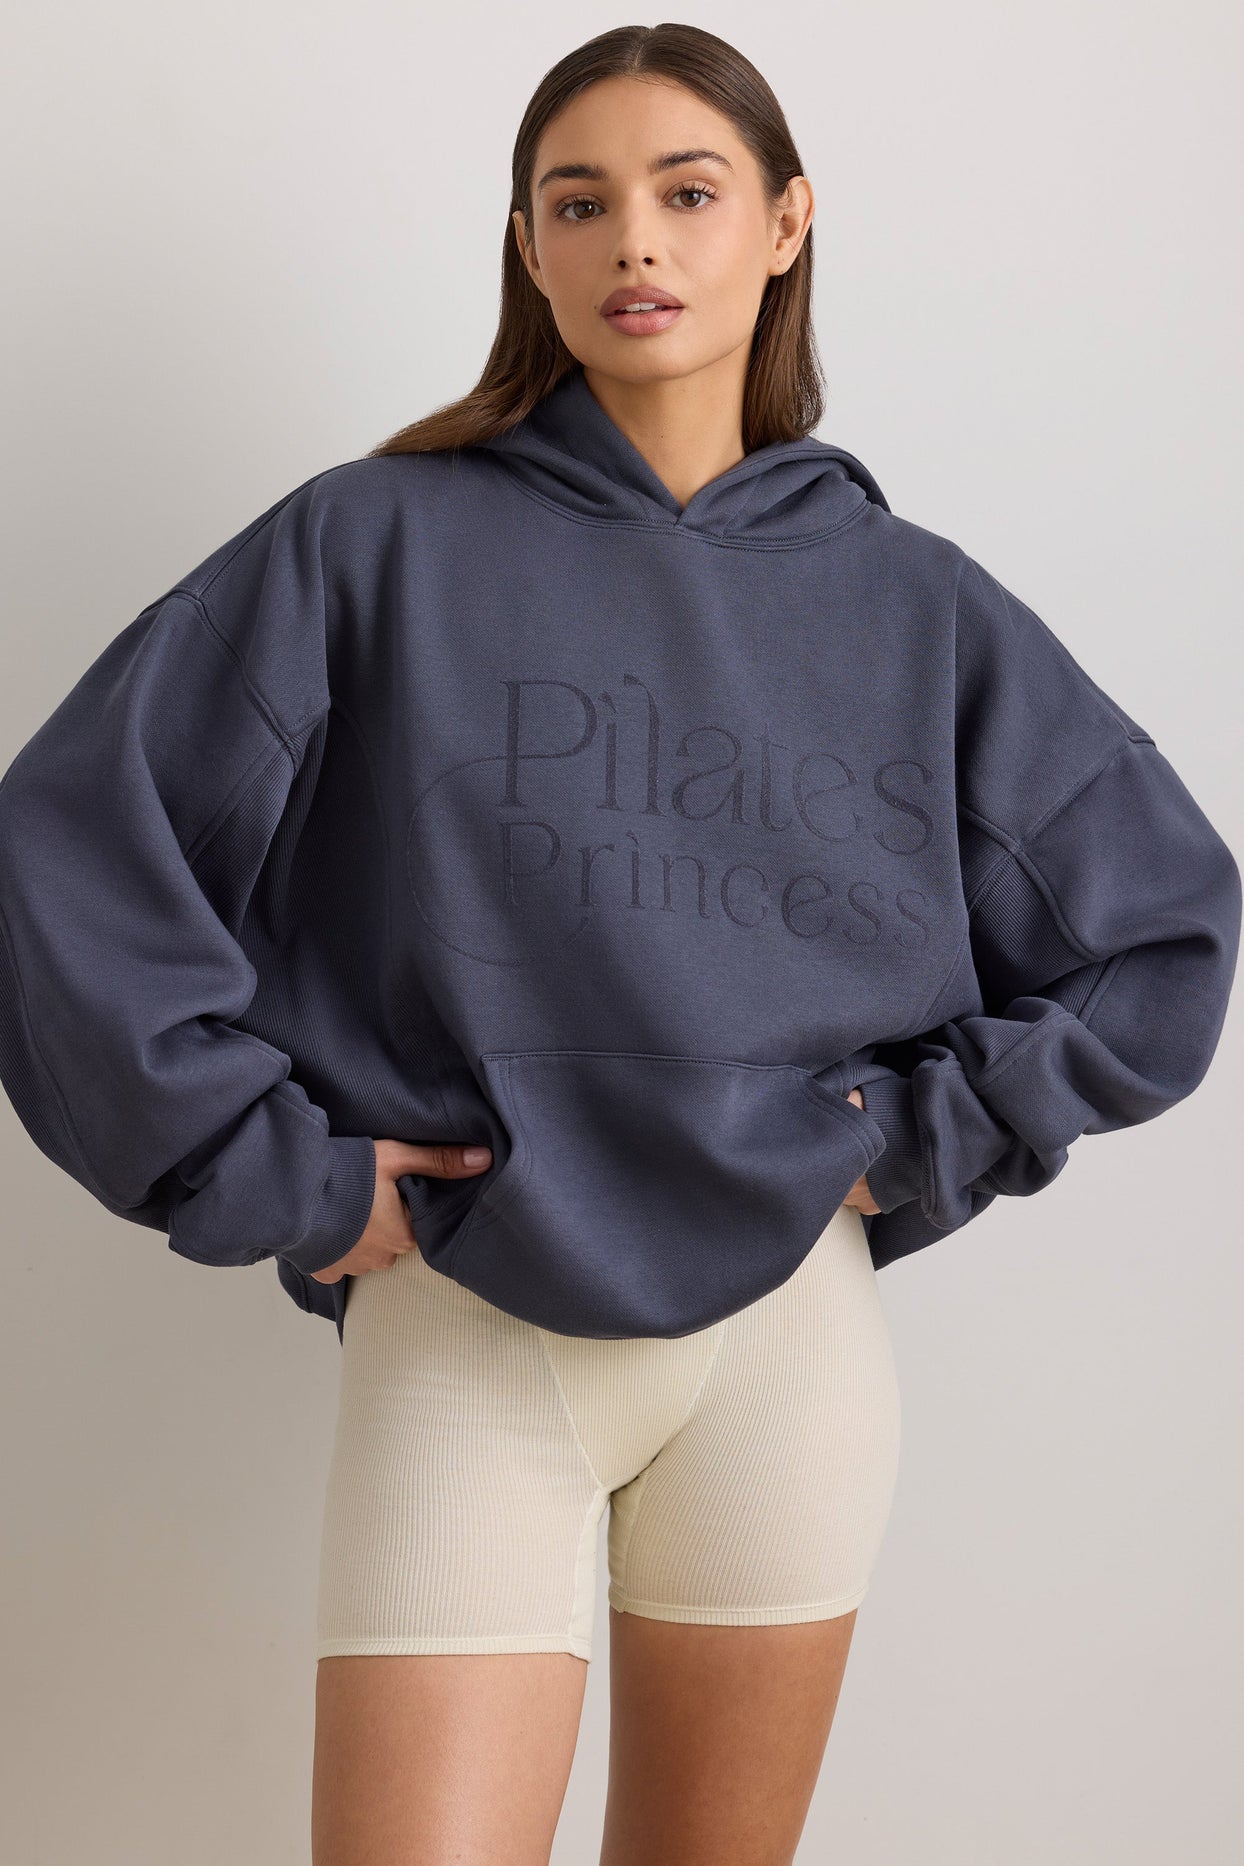 Pilates Princess Oversized Hooded Sweatshirt in Vanilla